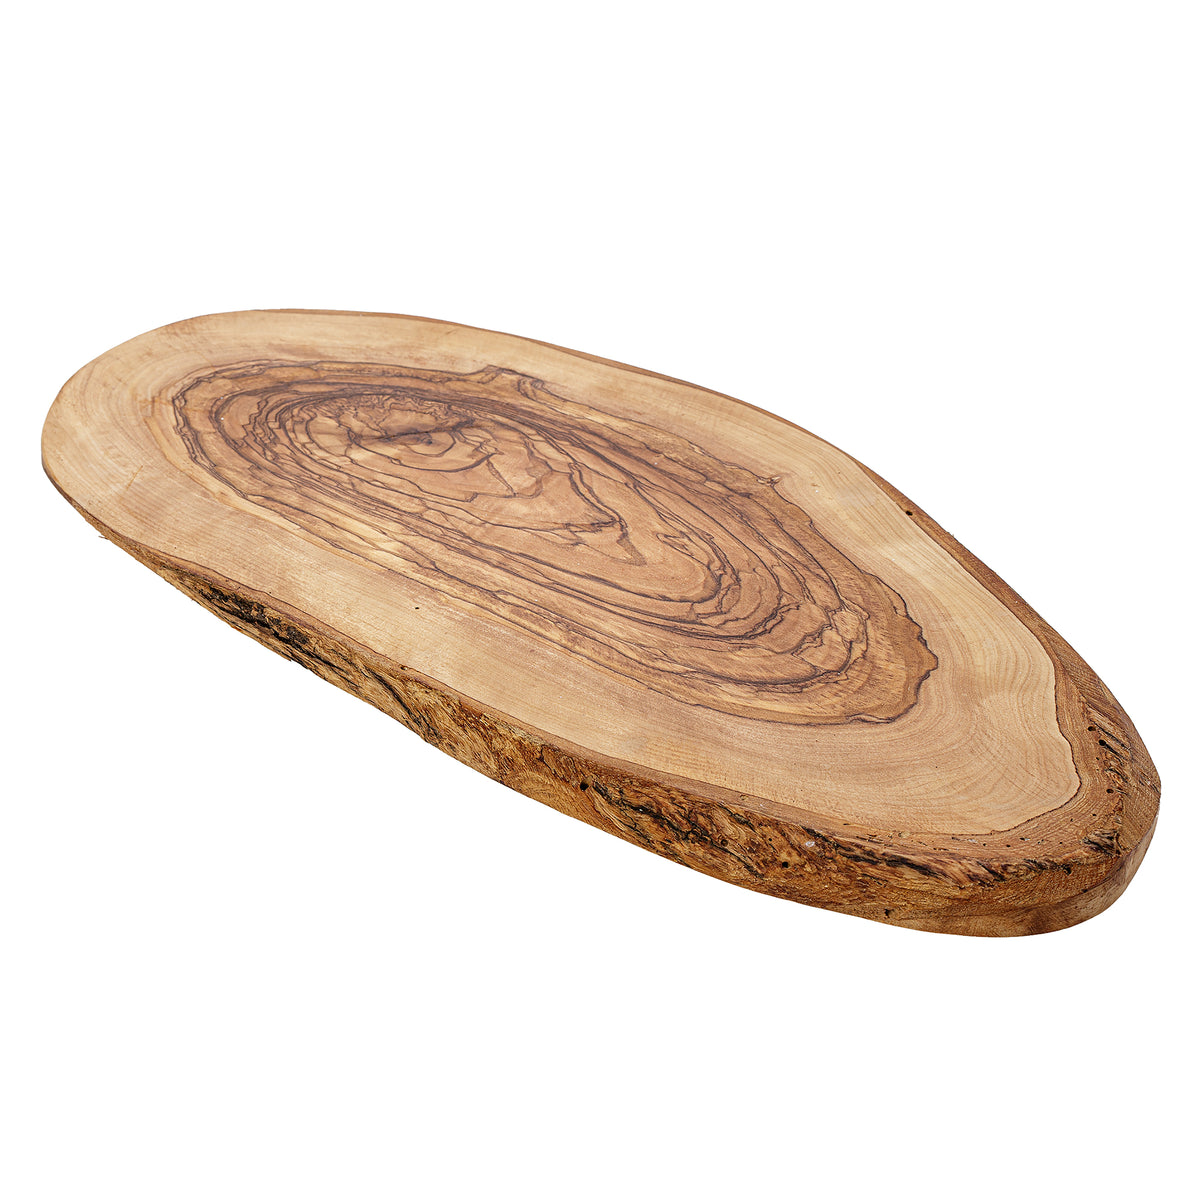 Mediterranean Natural Olive Wood - Rustic Cutting Board